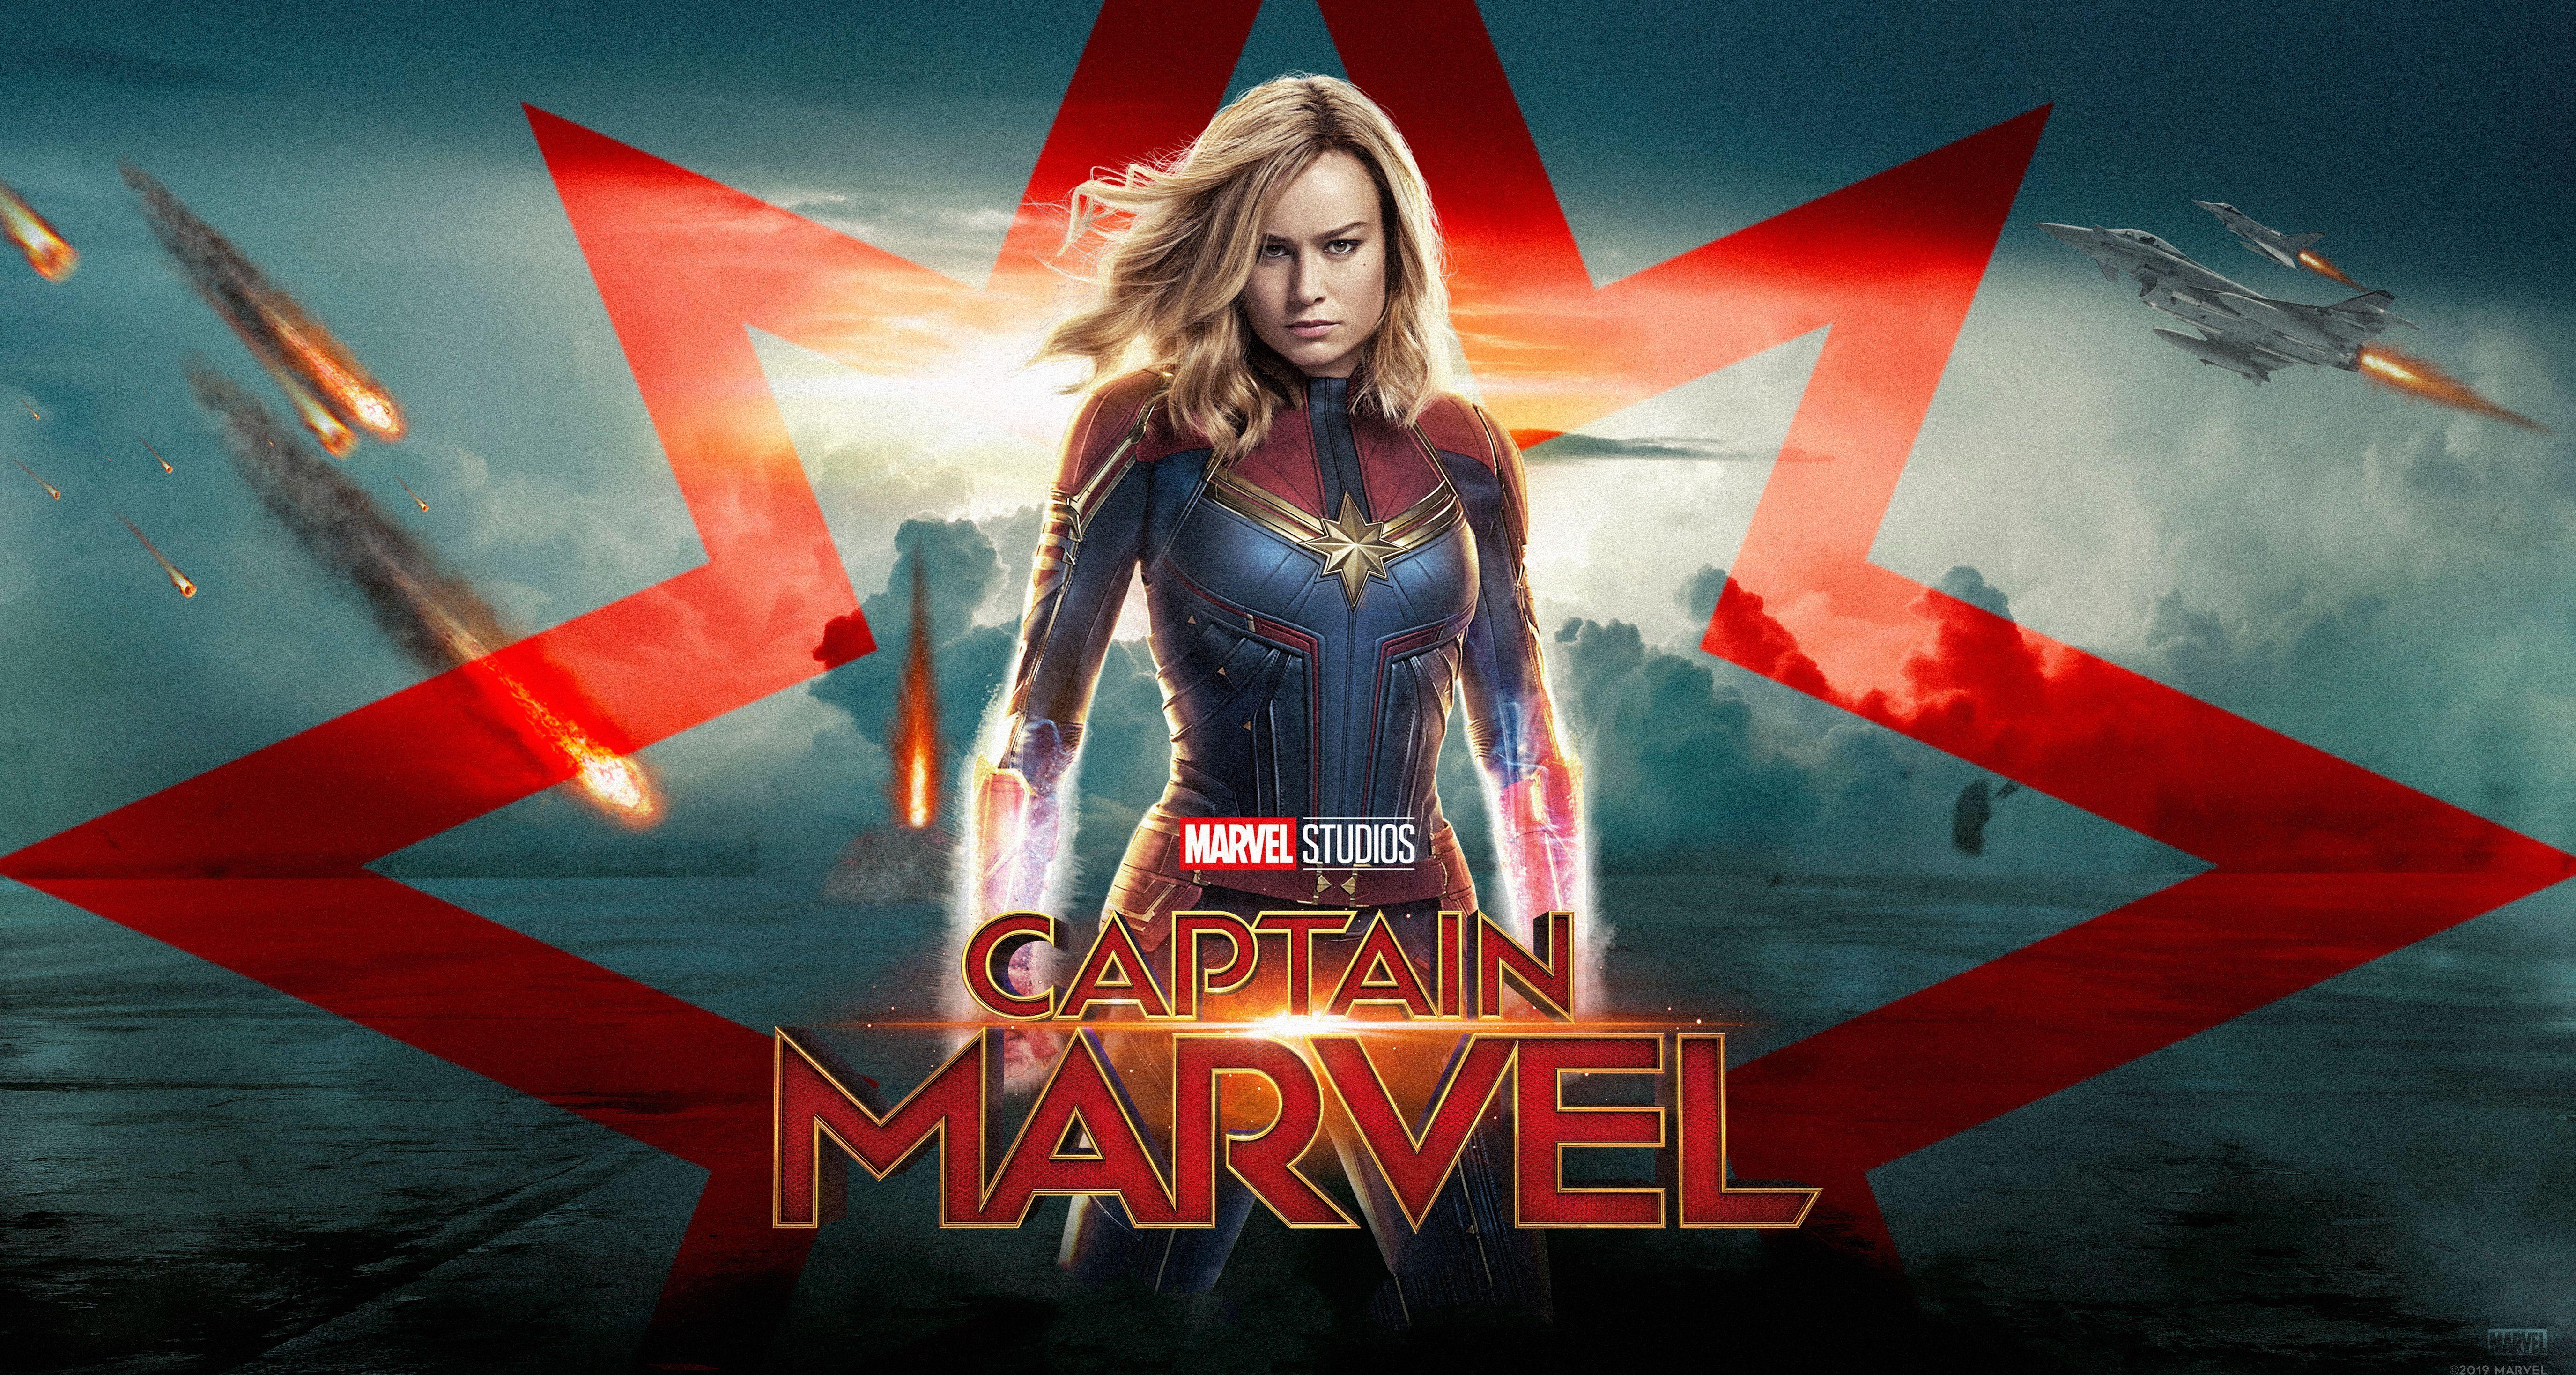 3 Sizes Movie Poster 2019 Marvel Studio's "Captain Marvel" With Brie Larson 